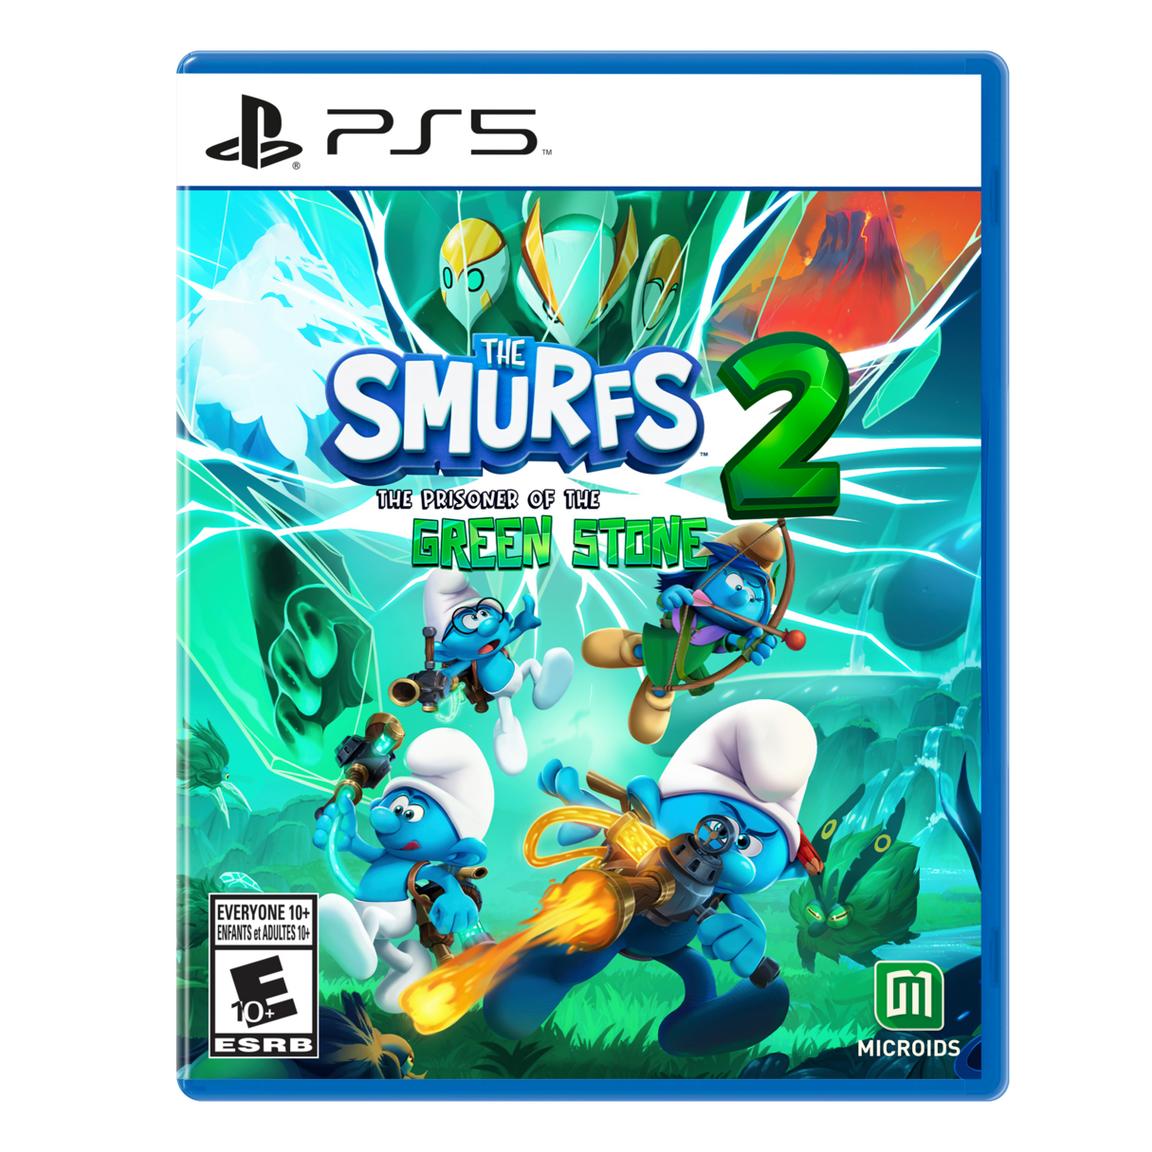 Видеоигра The Smurfs 2: Prisoner of the Green Stone - PlayStation 5 ps5 игра microids flashback 2 лимитированное издание